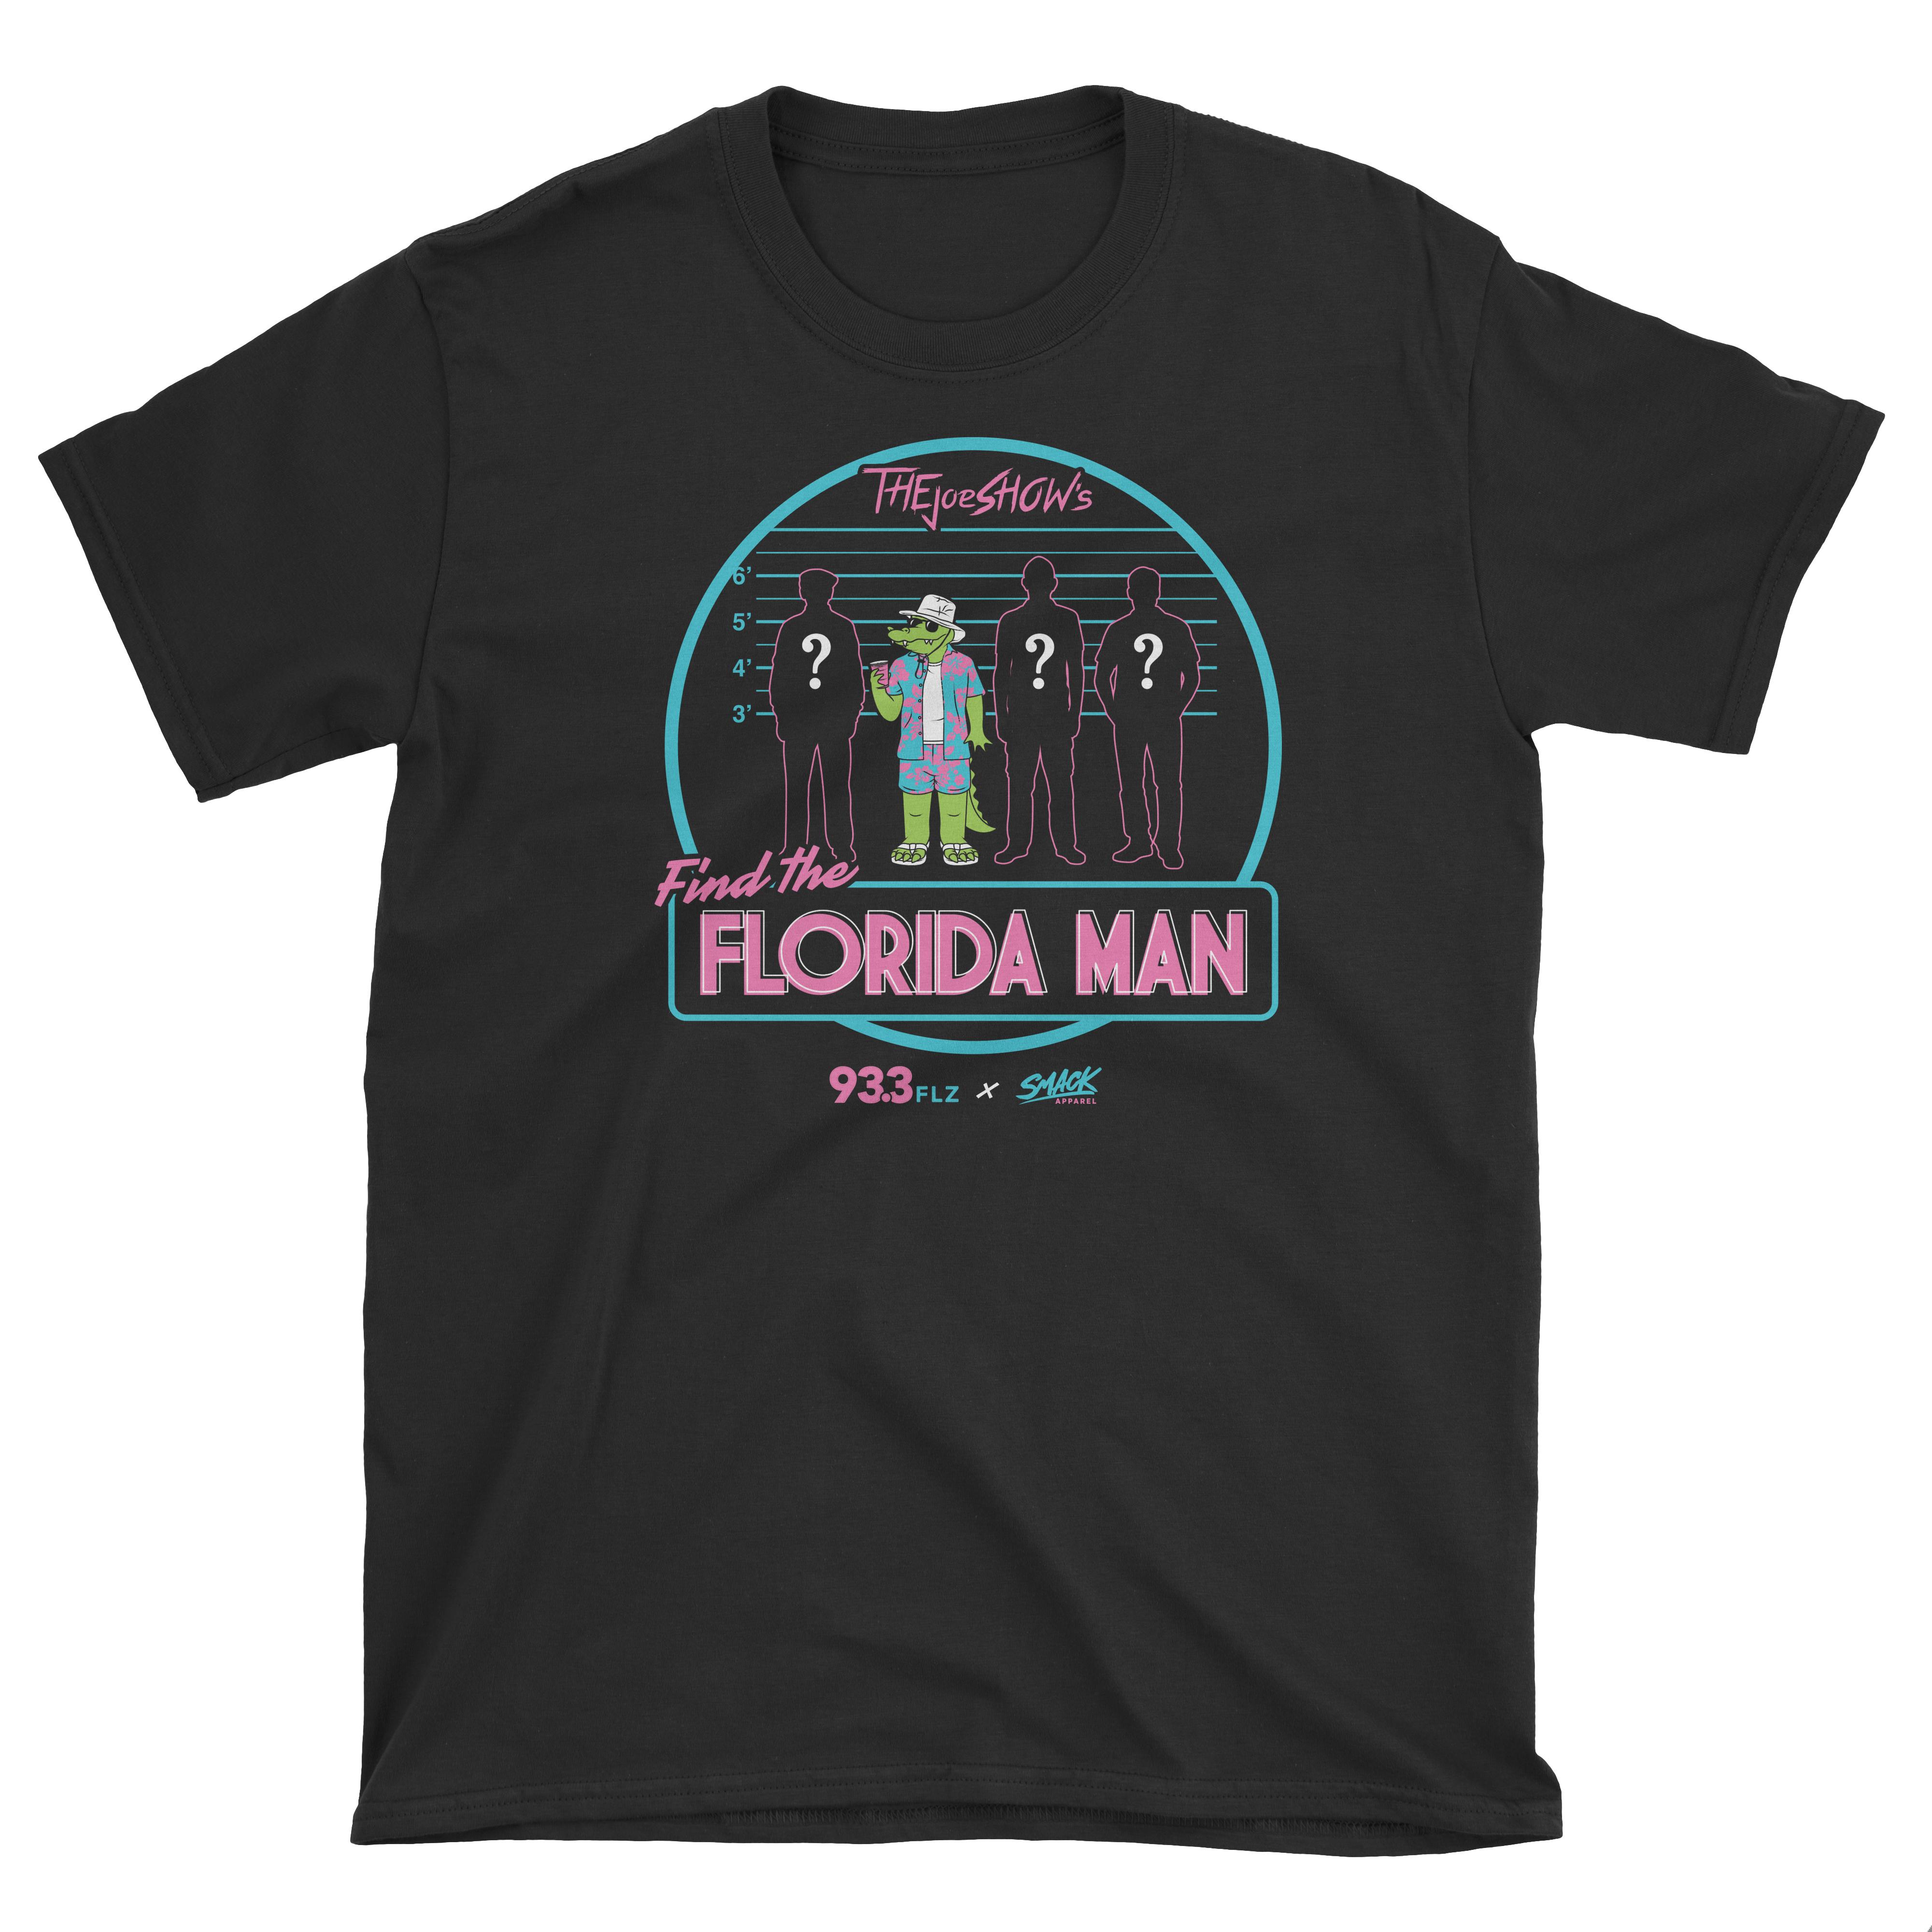 Florida Man T-Shirt for the Joe Show Fans (SM-5XL)